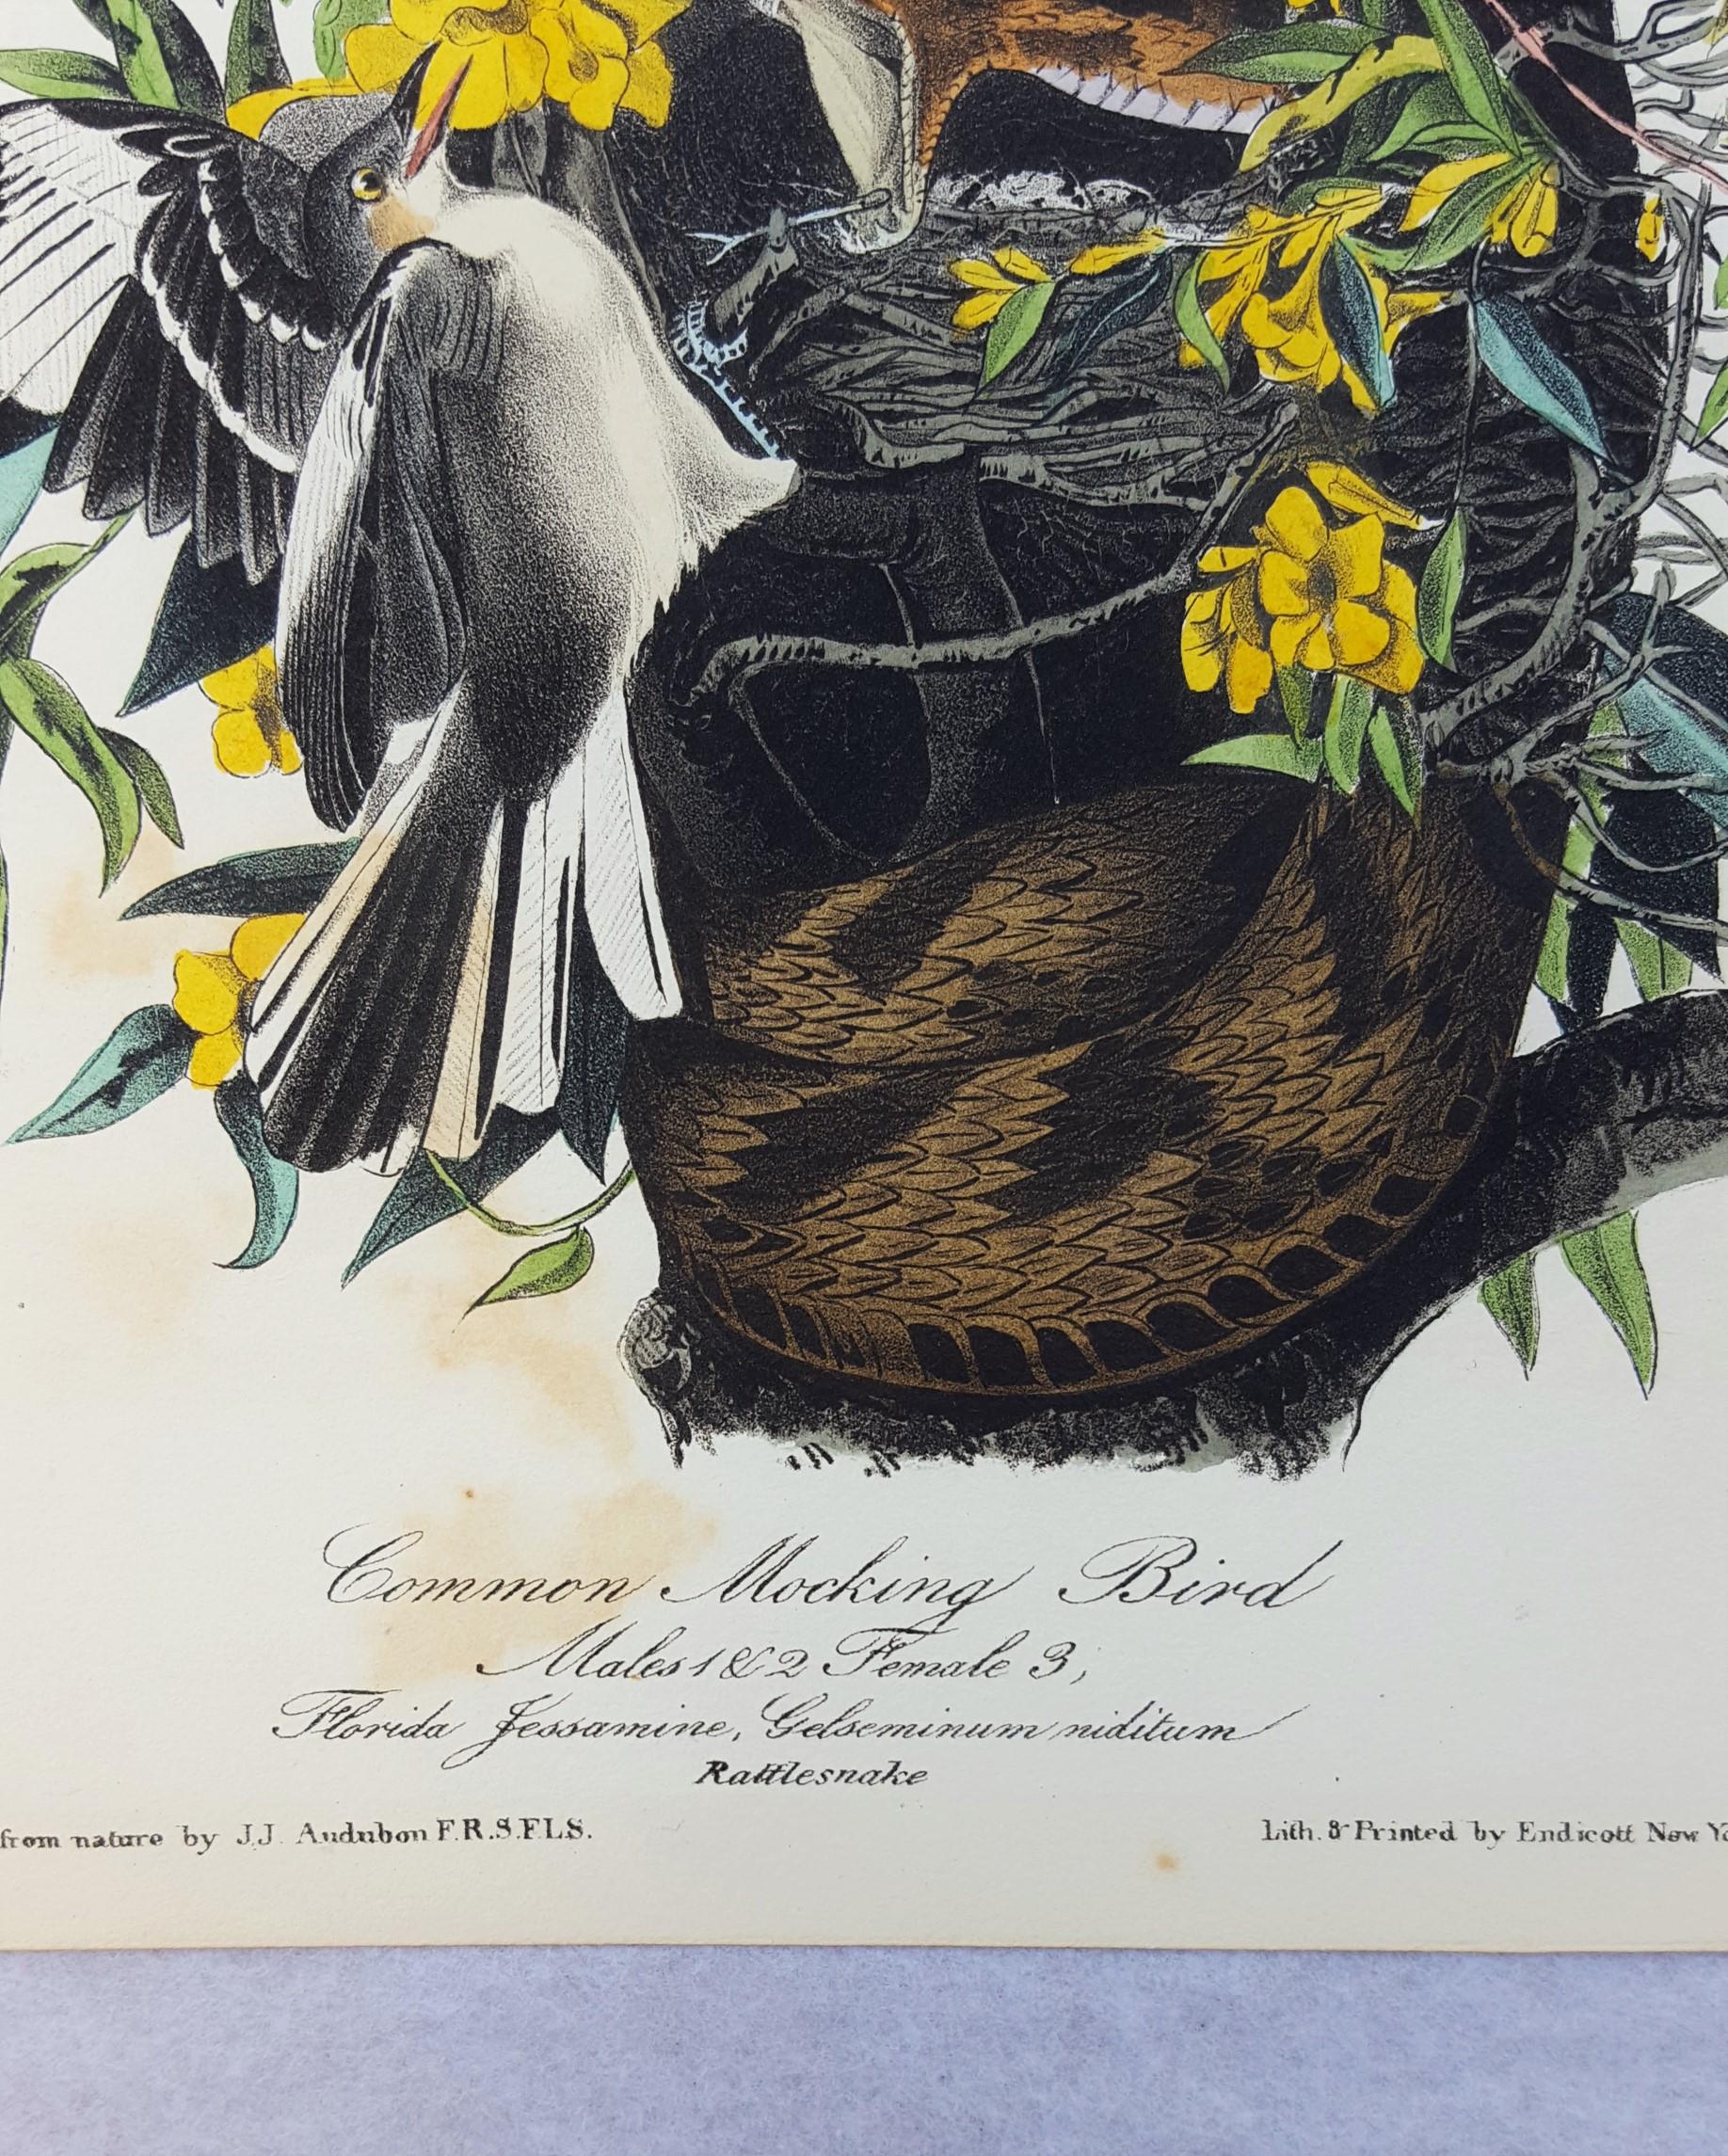 An original hand-colored lithograph on wove paper by American artist John James Audubon (1785-1851) titled 